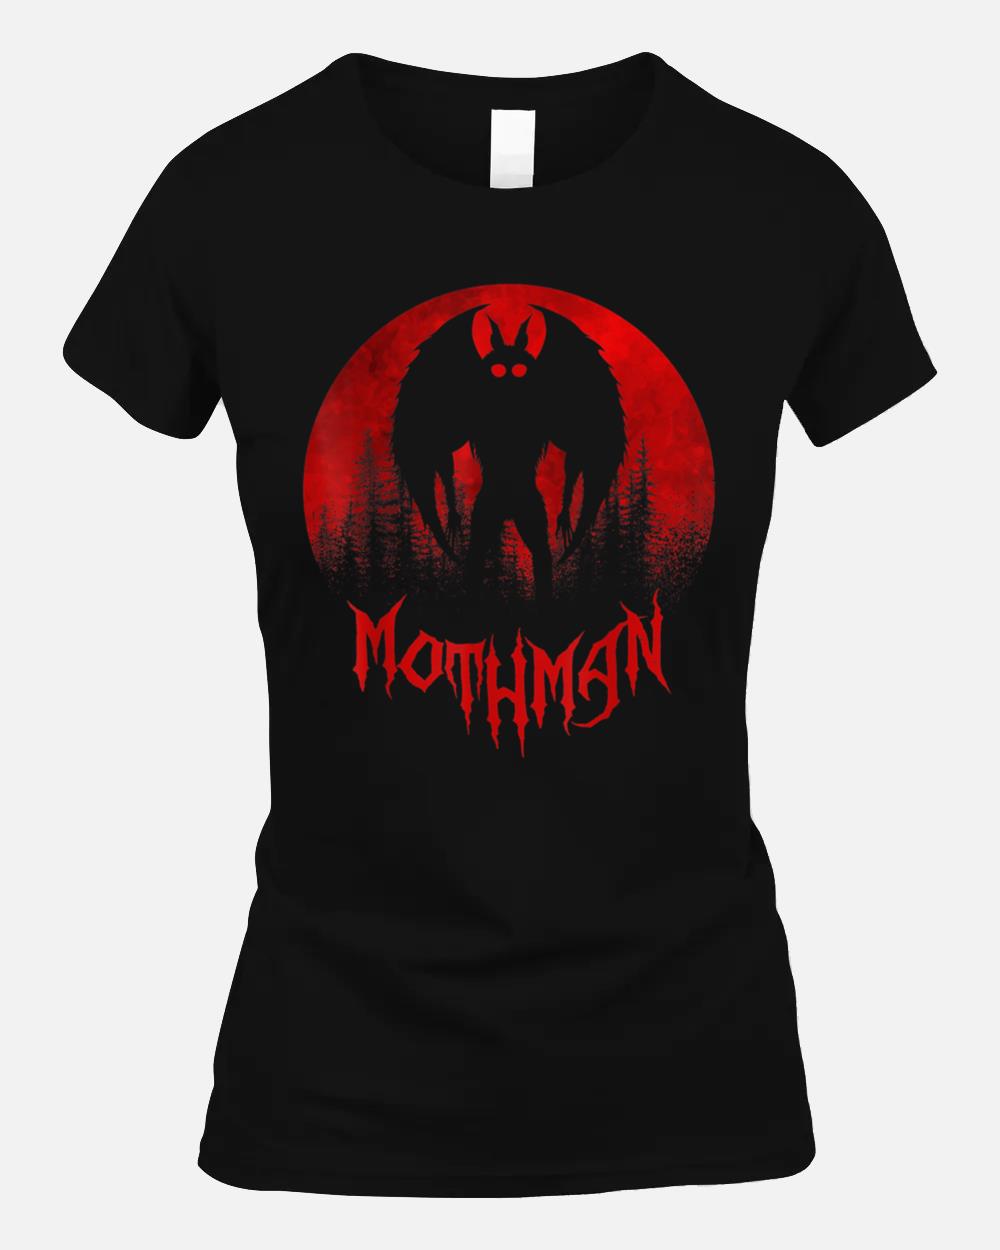 Mothman  Folklore Cryptid For Men Women And Kids  Mothman Unisex T-Shirt